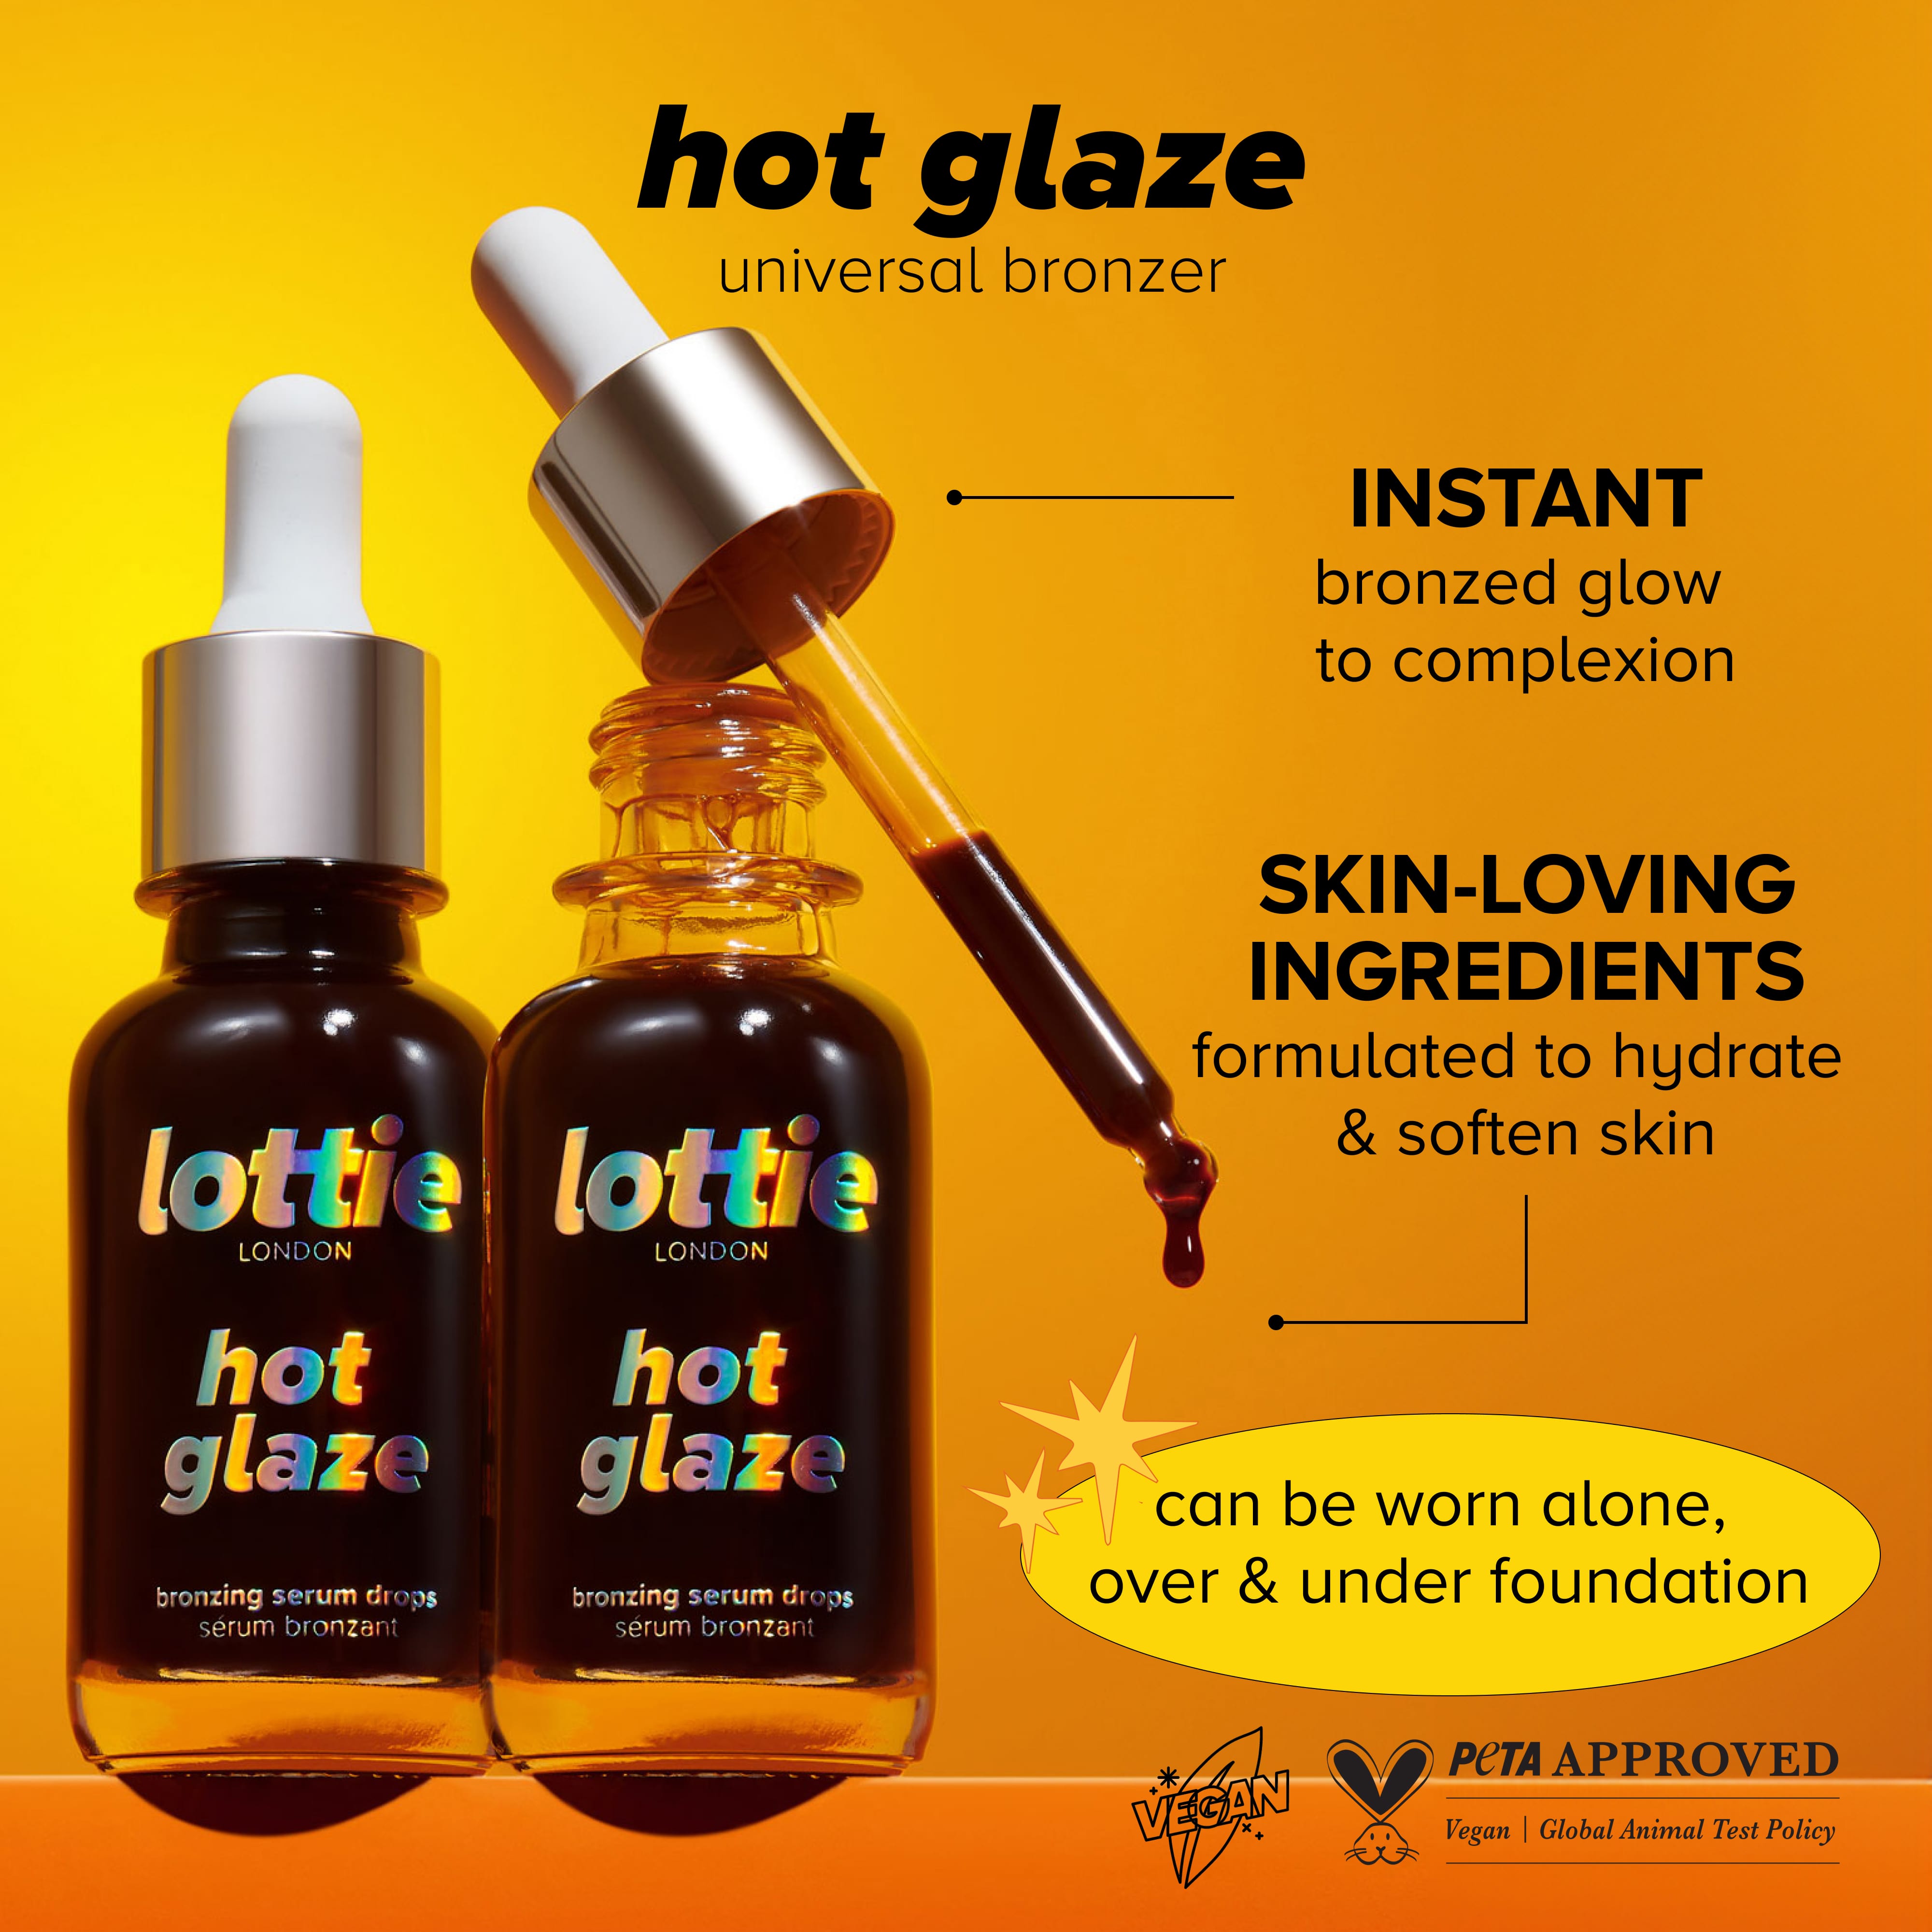 hot glaze bronzing serum drops